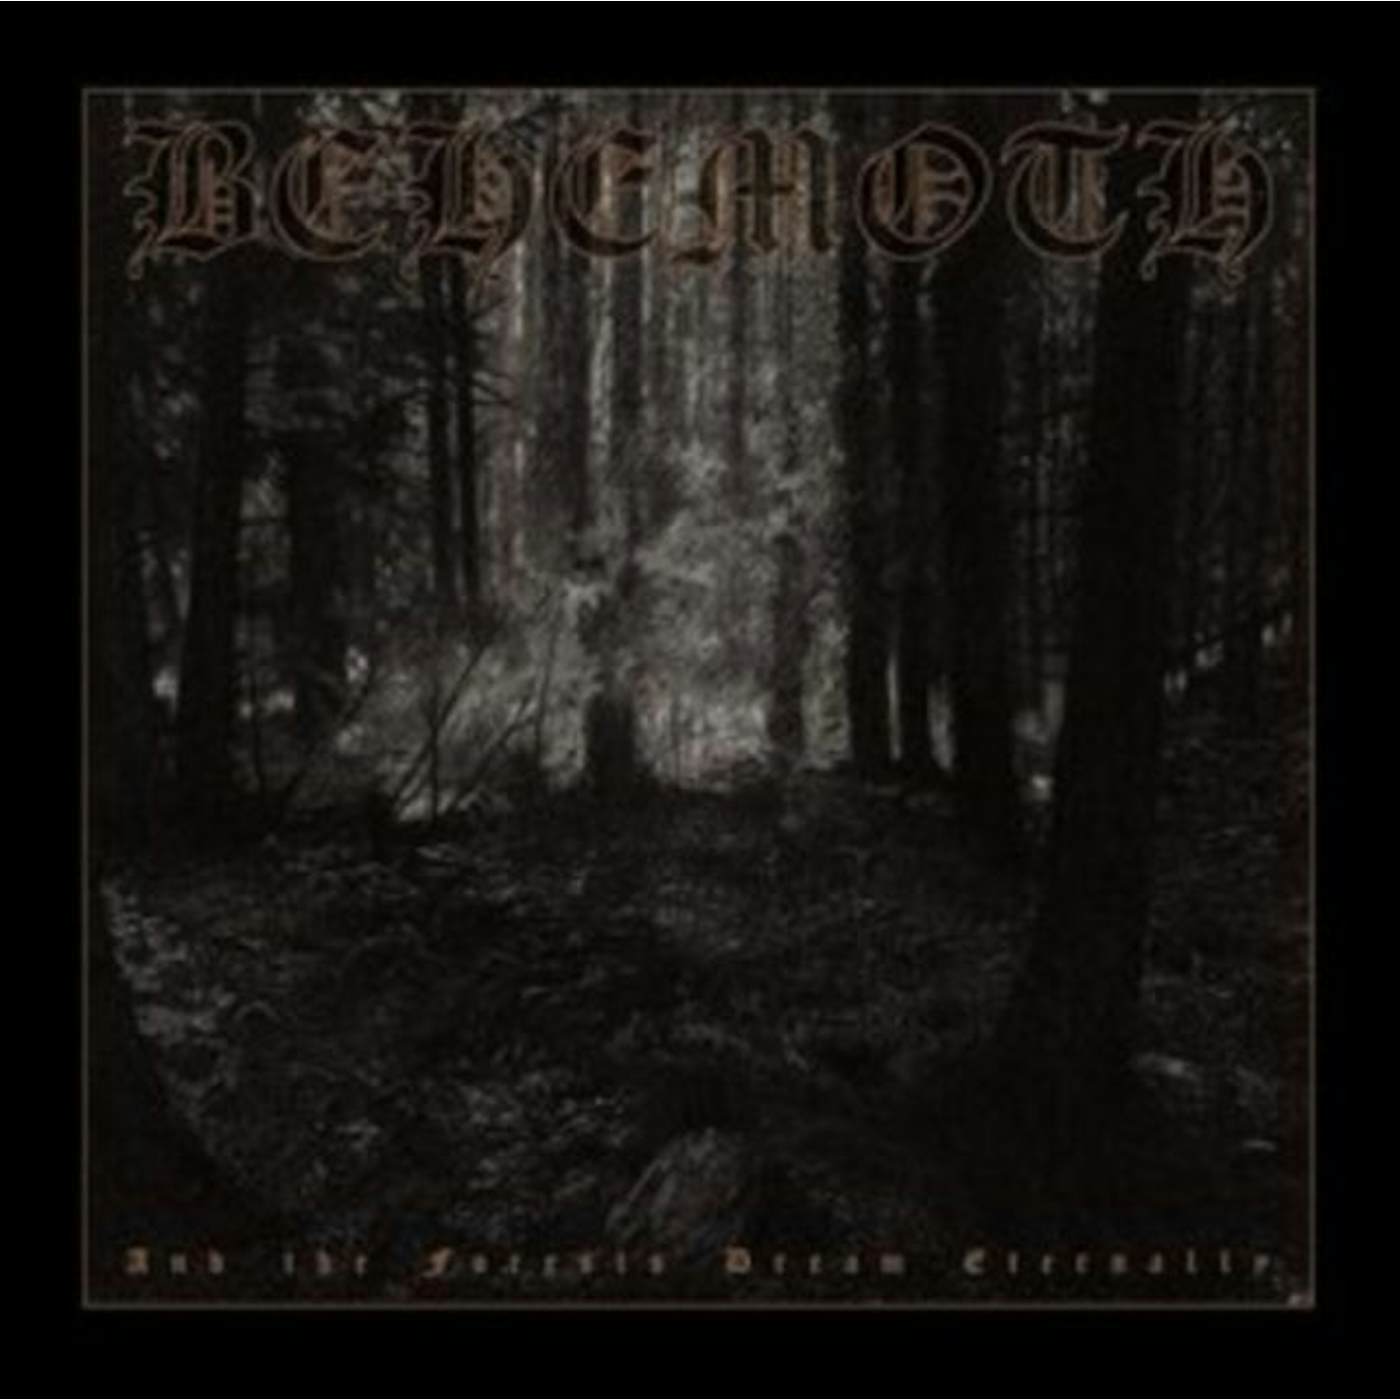 Behemoth LP - And The Forests Dream Eternall (Vinyl)